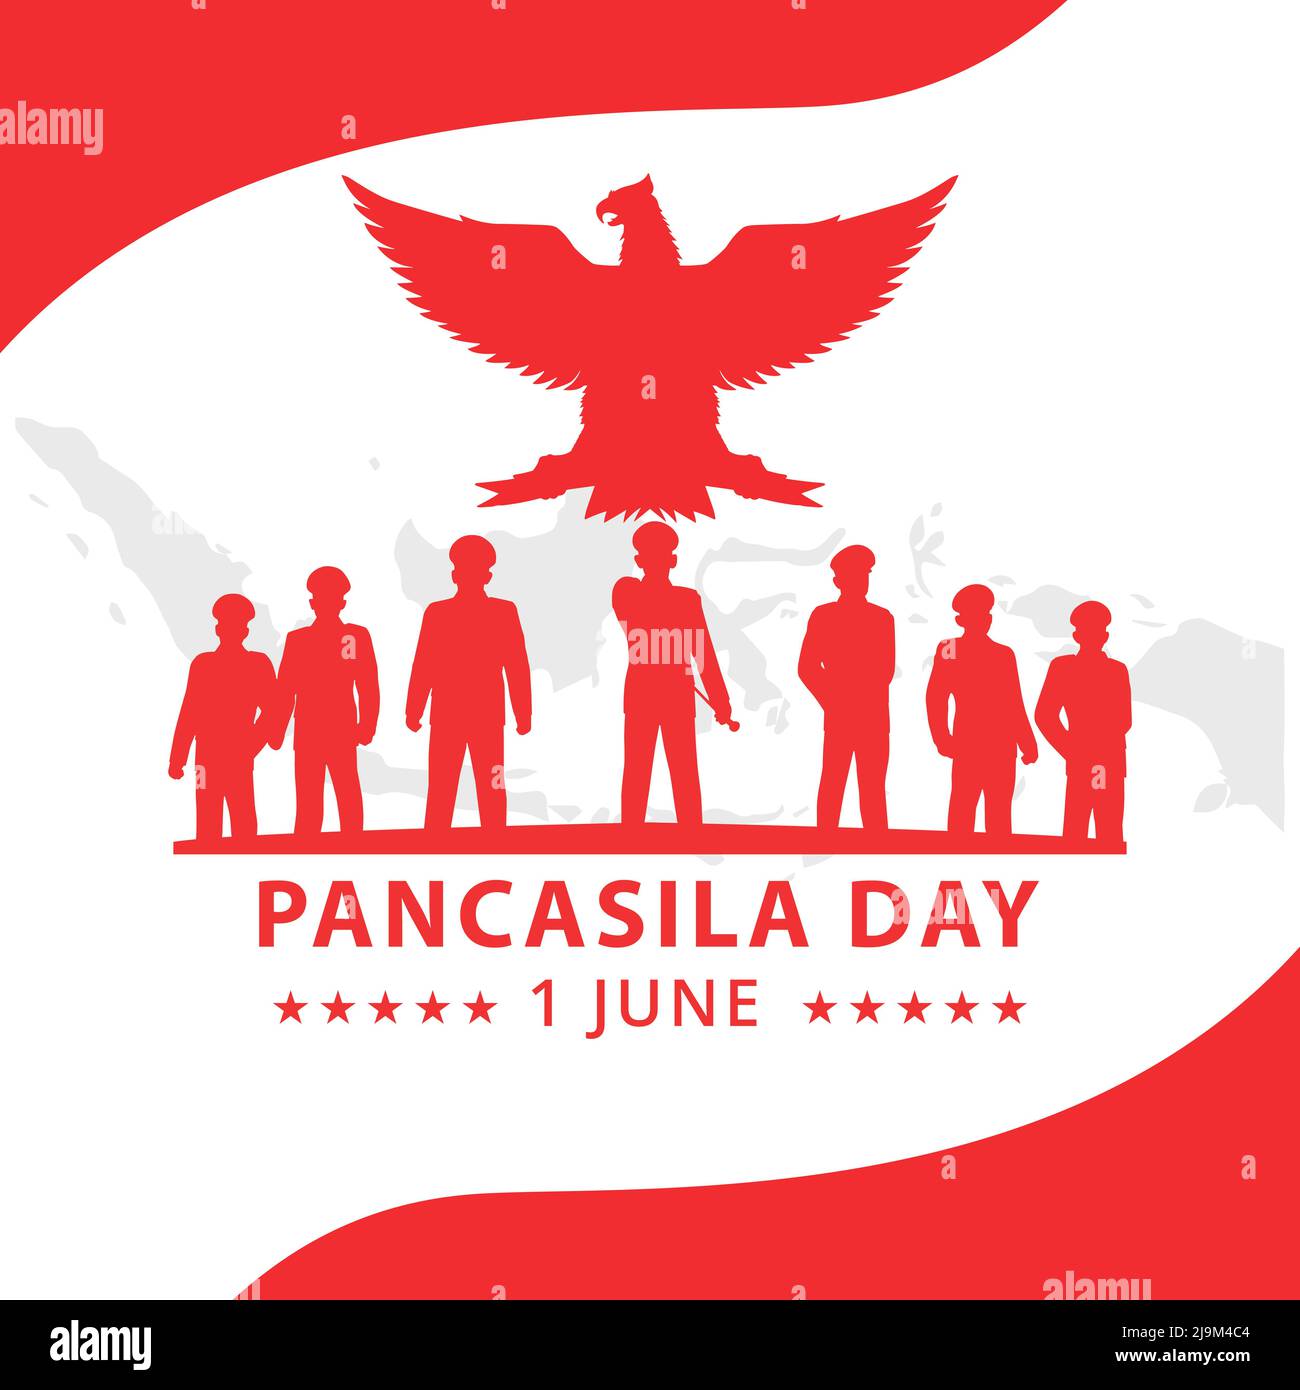 Pancasila Day 1 June with Garuda, Silhouette Revolutionary Hero, and Indonesian Island Vector Illustration Stock Vector